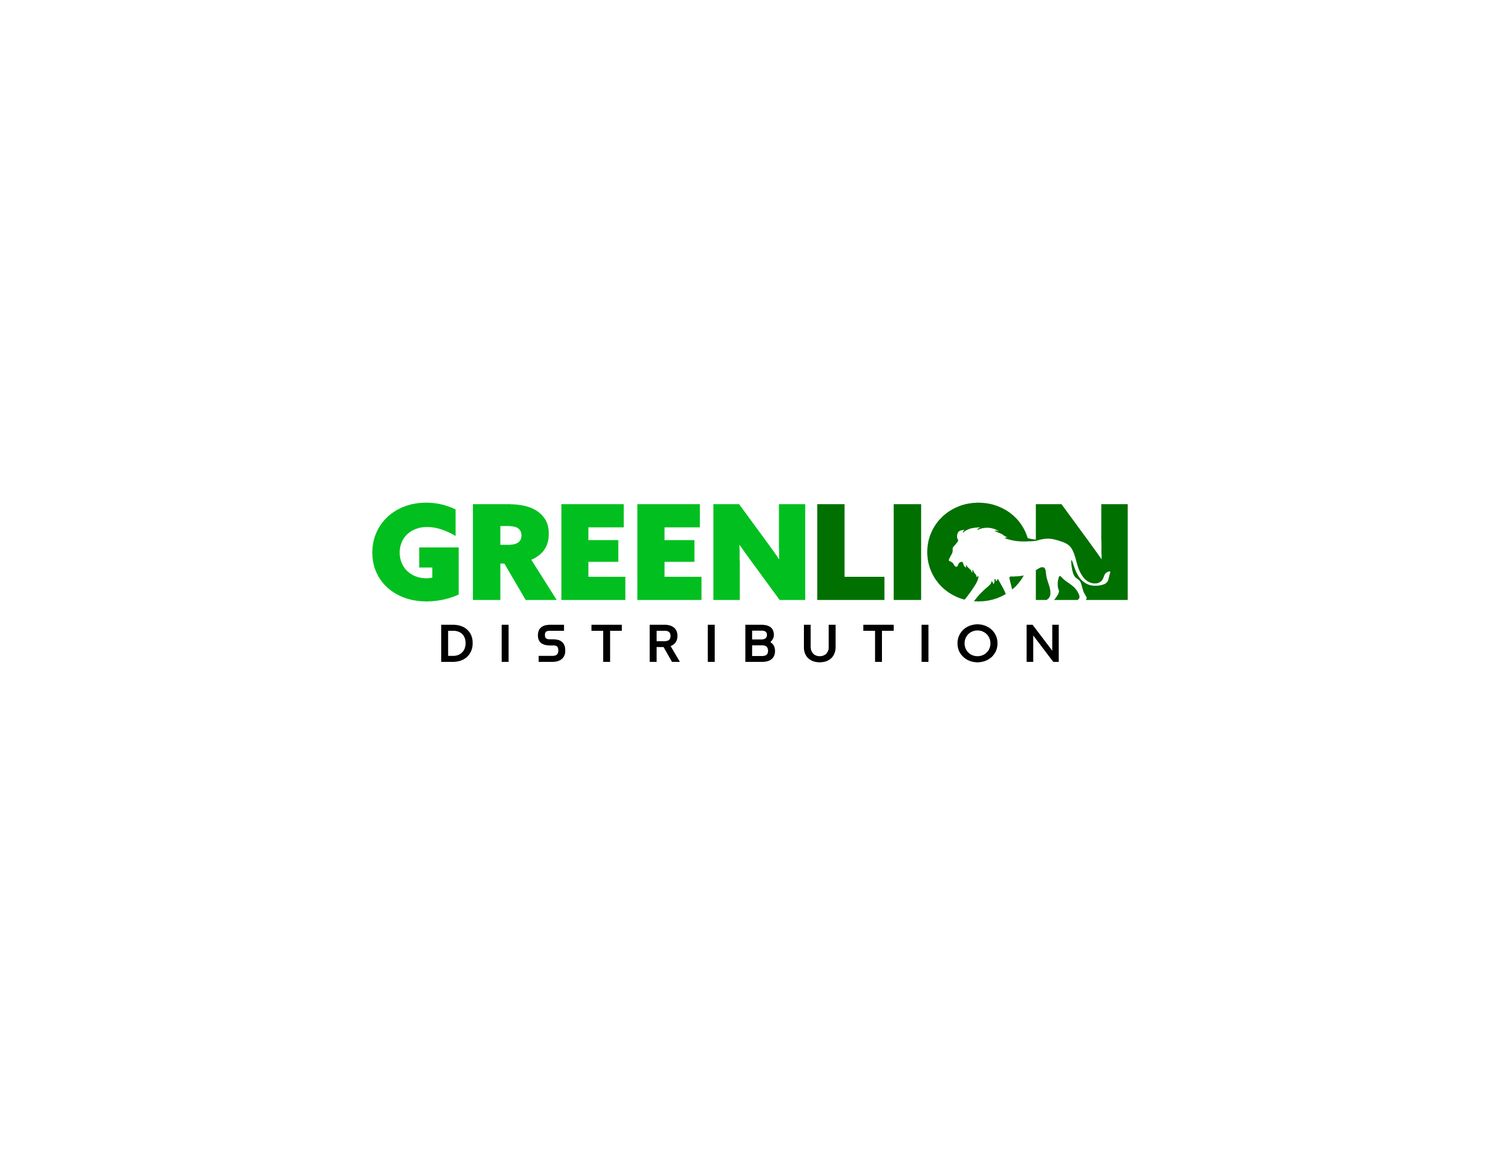 Green Lion Distribution